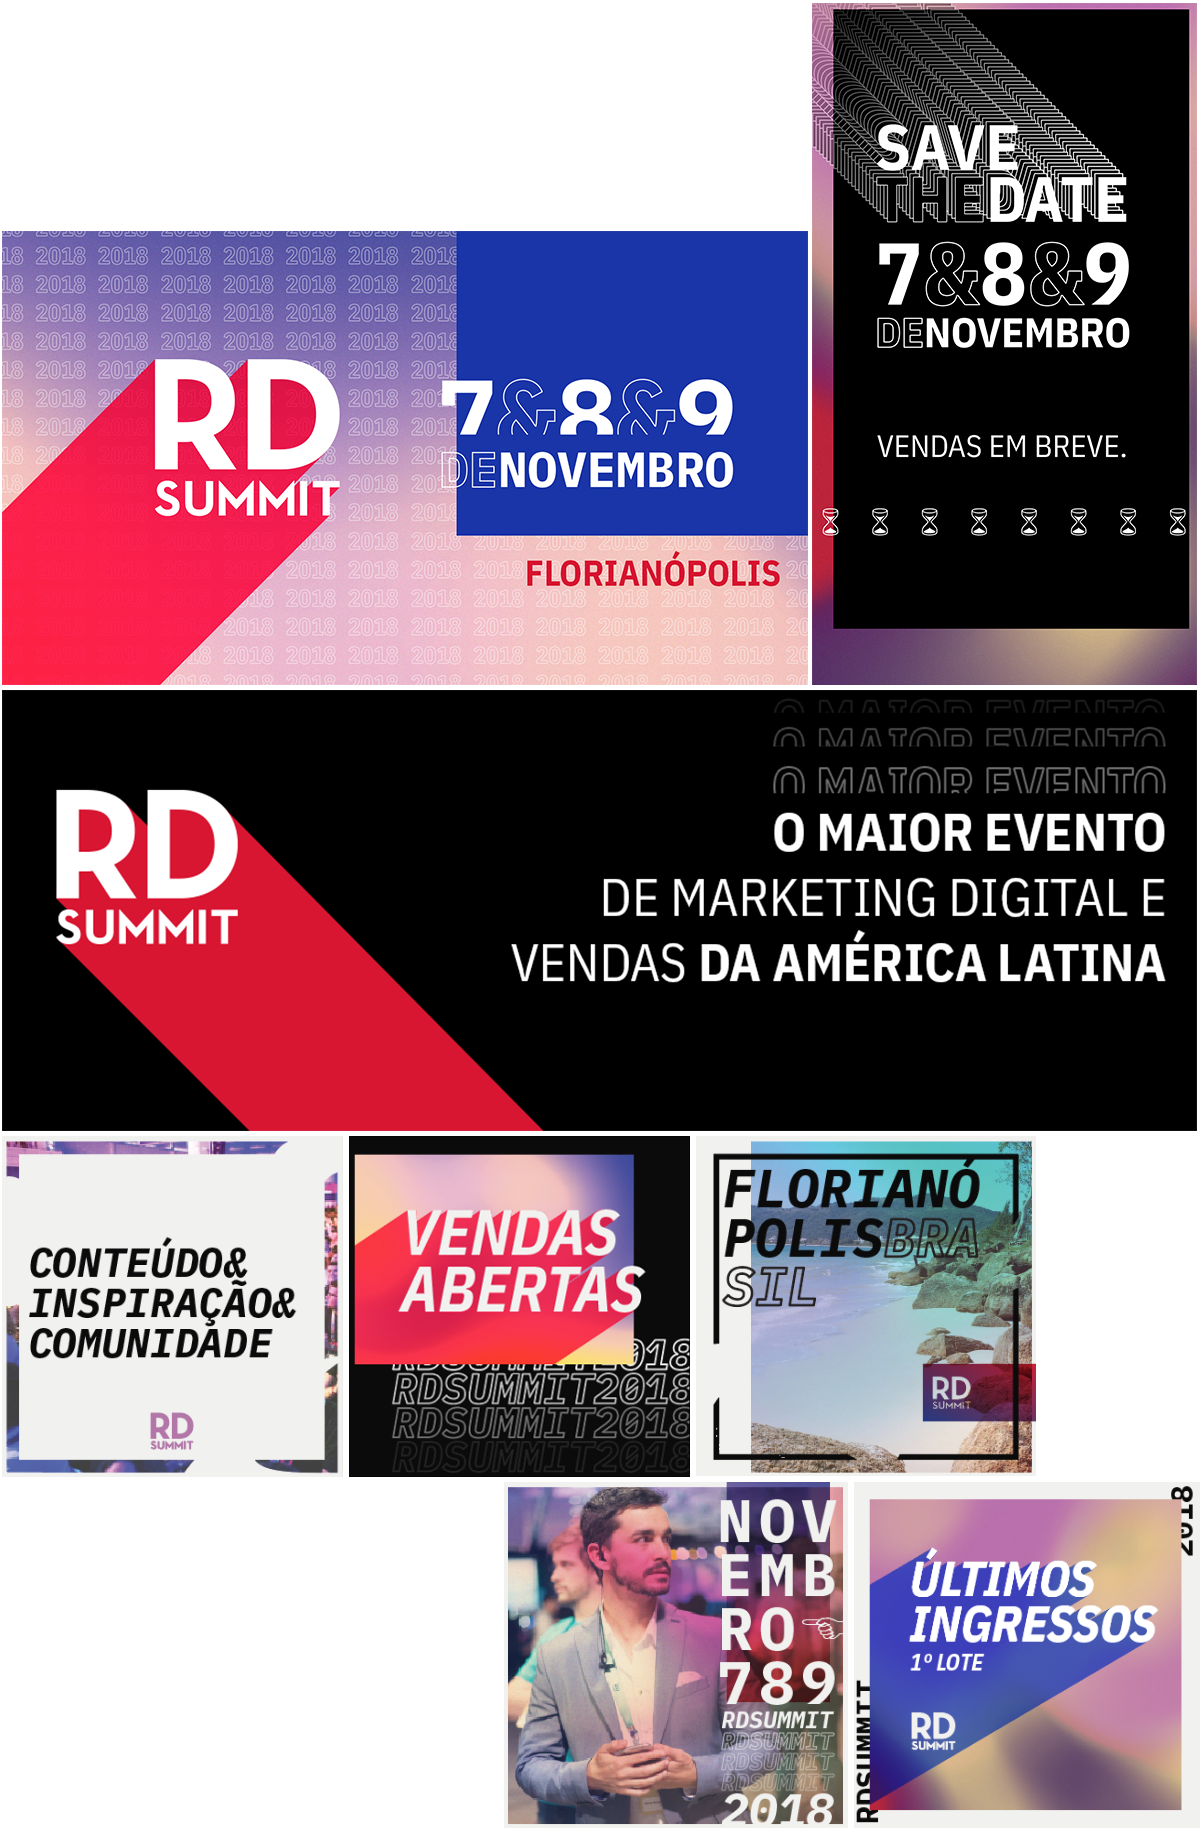 branding para eventos - rd summit 2018